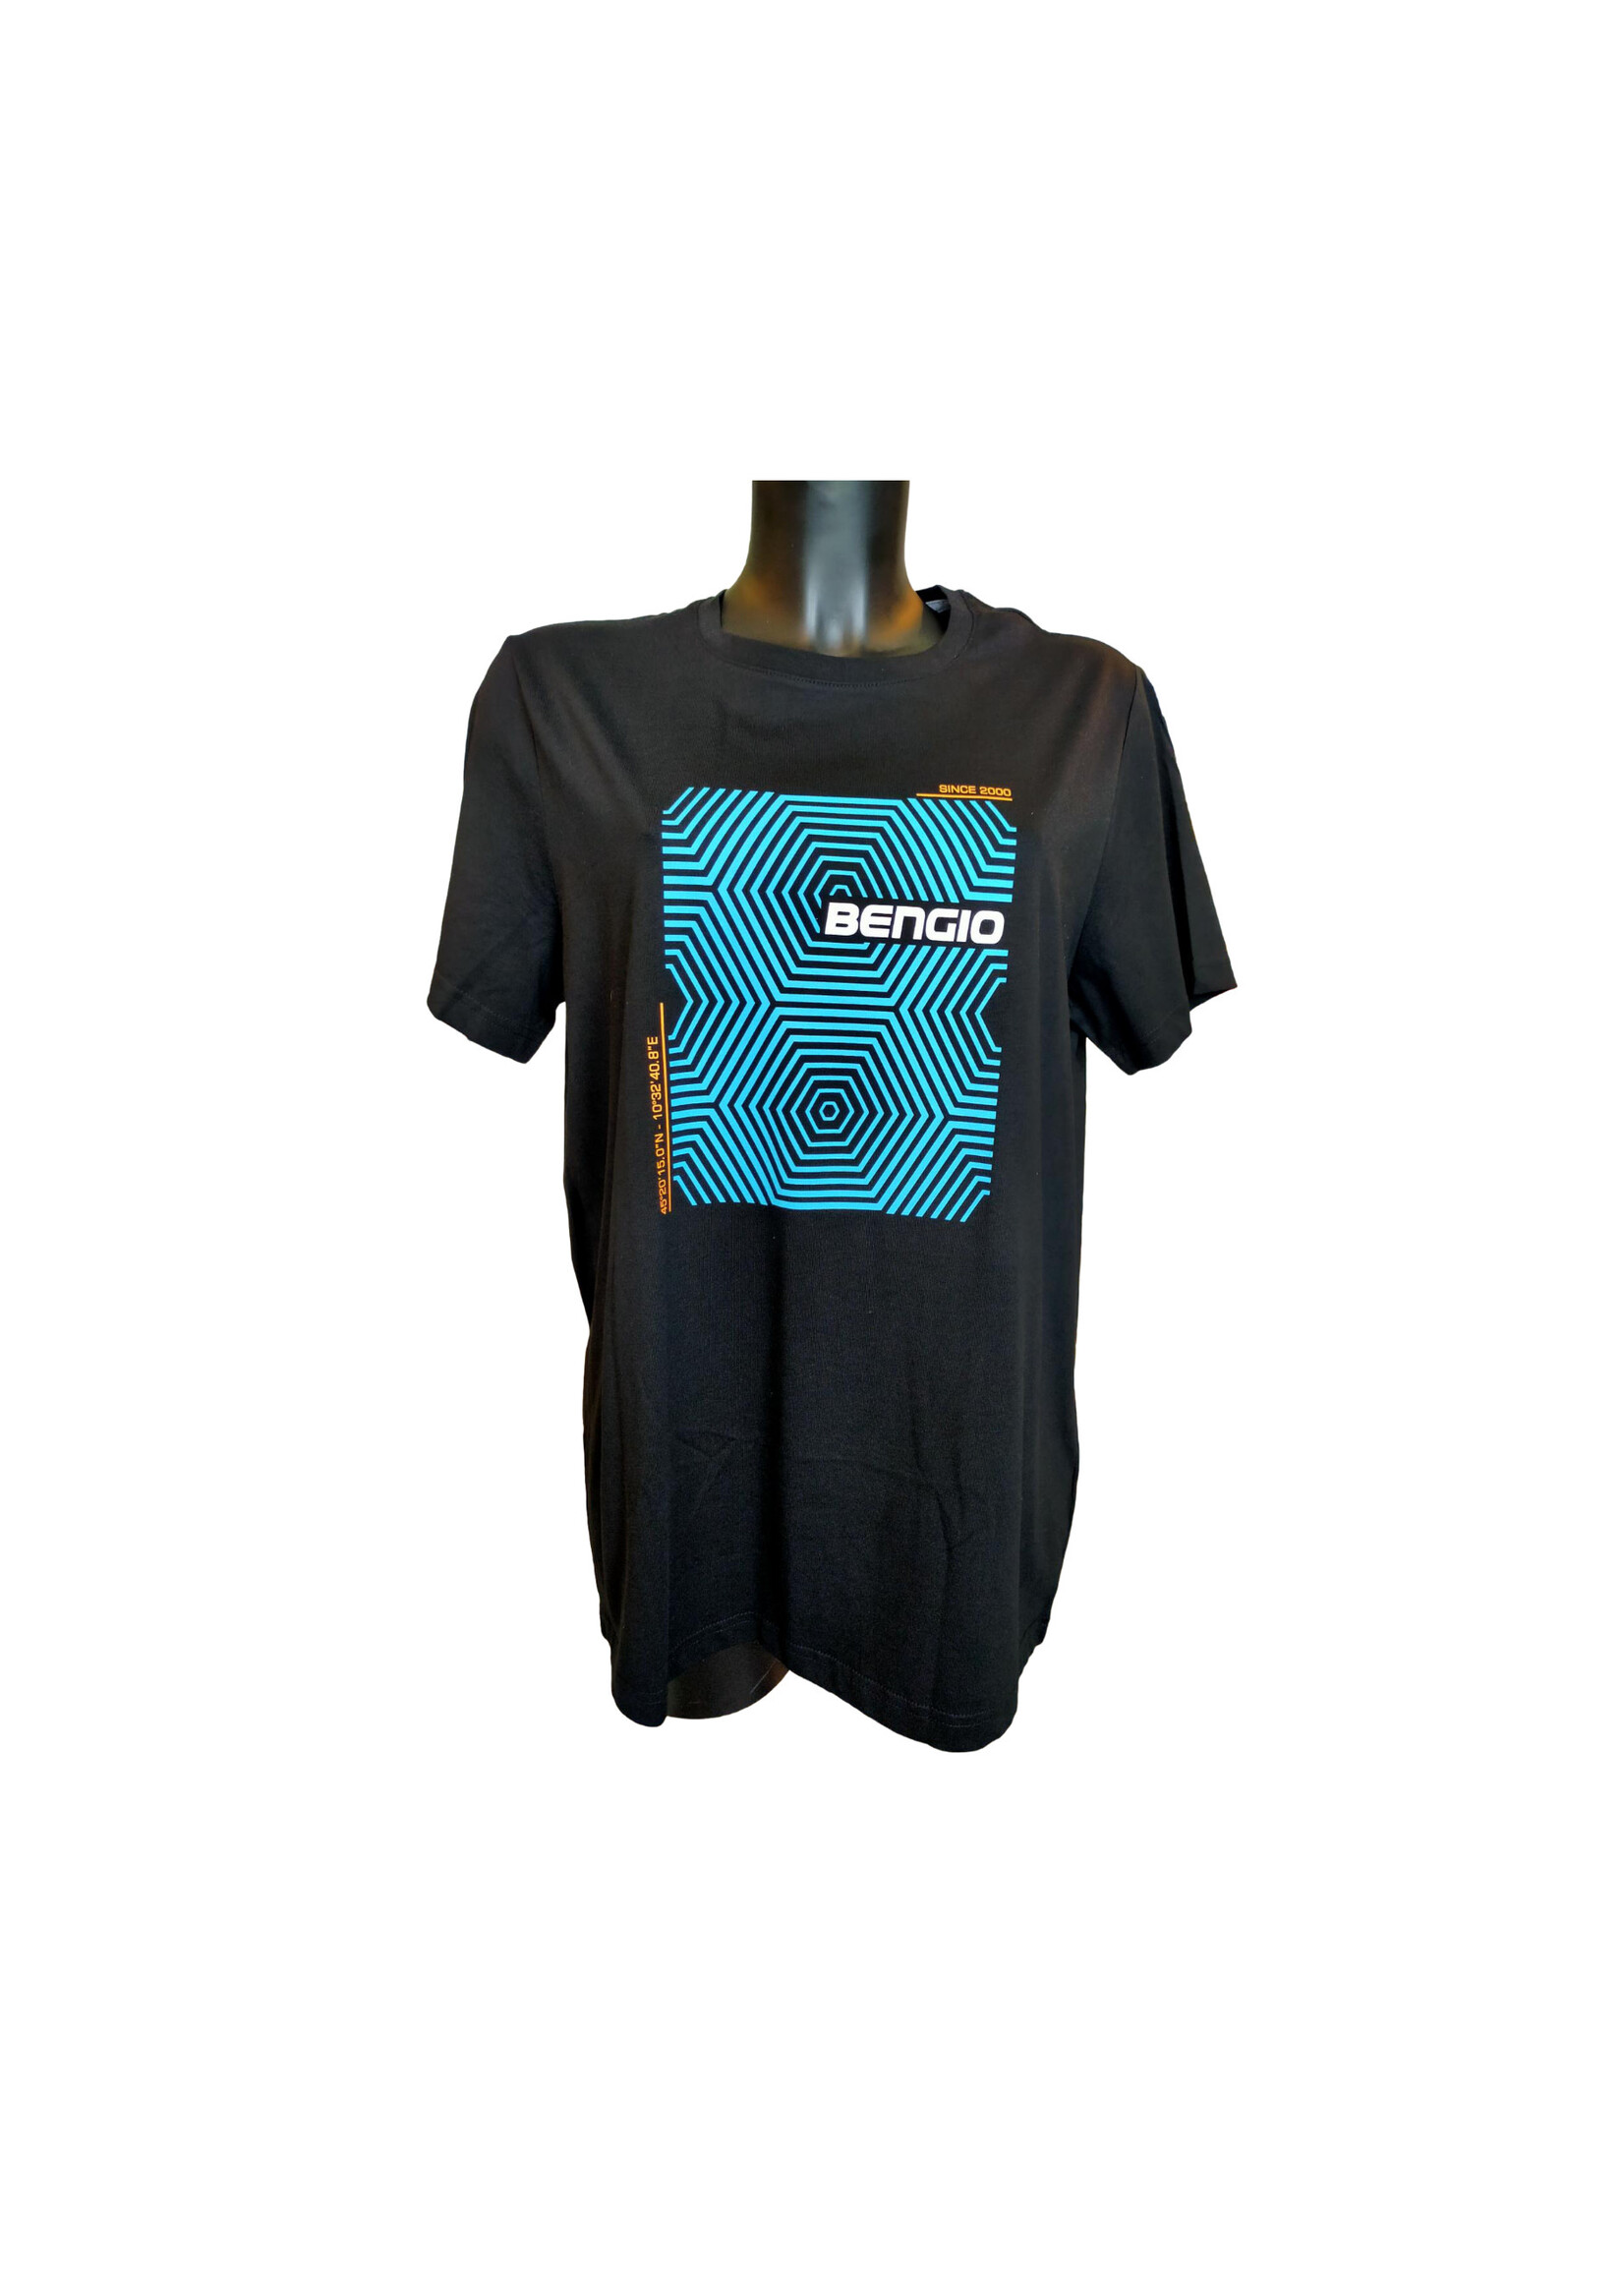 Bengio T-Shirt Bengio Schwarz/Blau